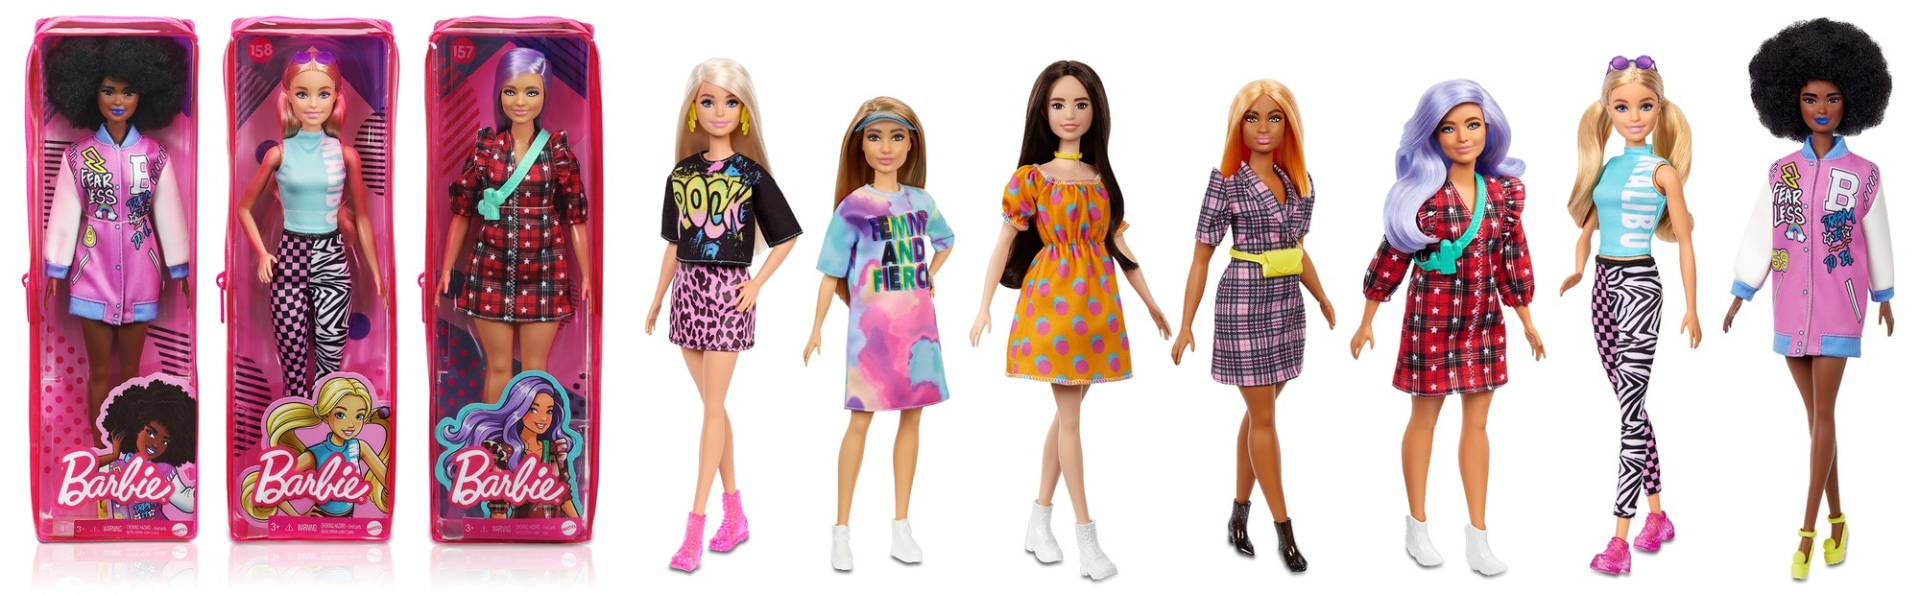 Nuevo empaque reutilizable para Barbie Fashionistas